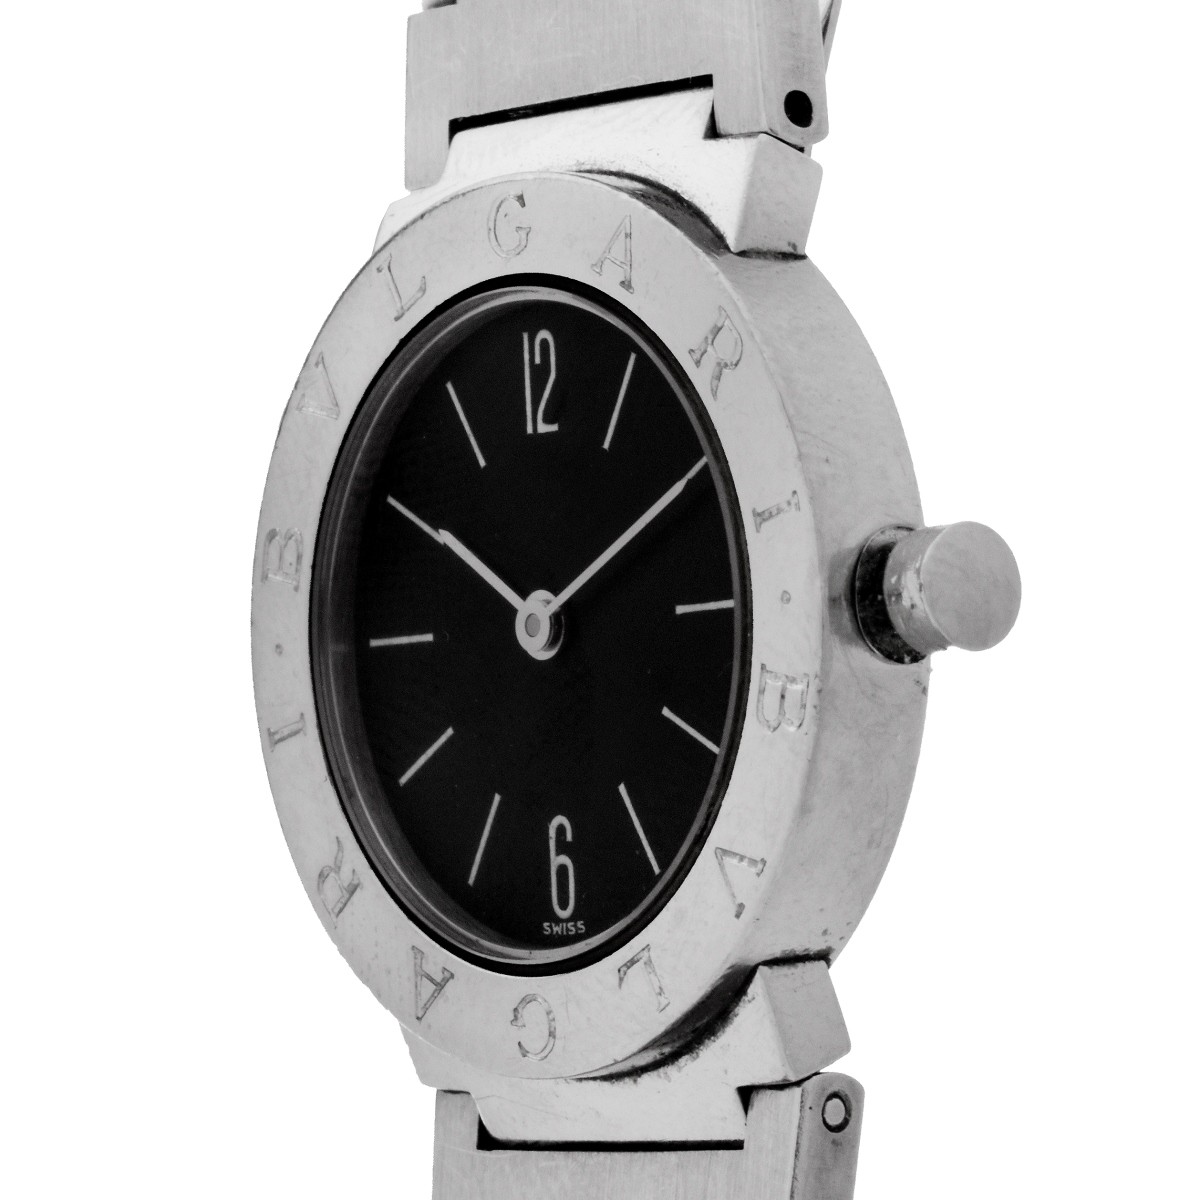 Lady's Bulgari Stainless Steel Watch